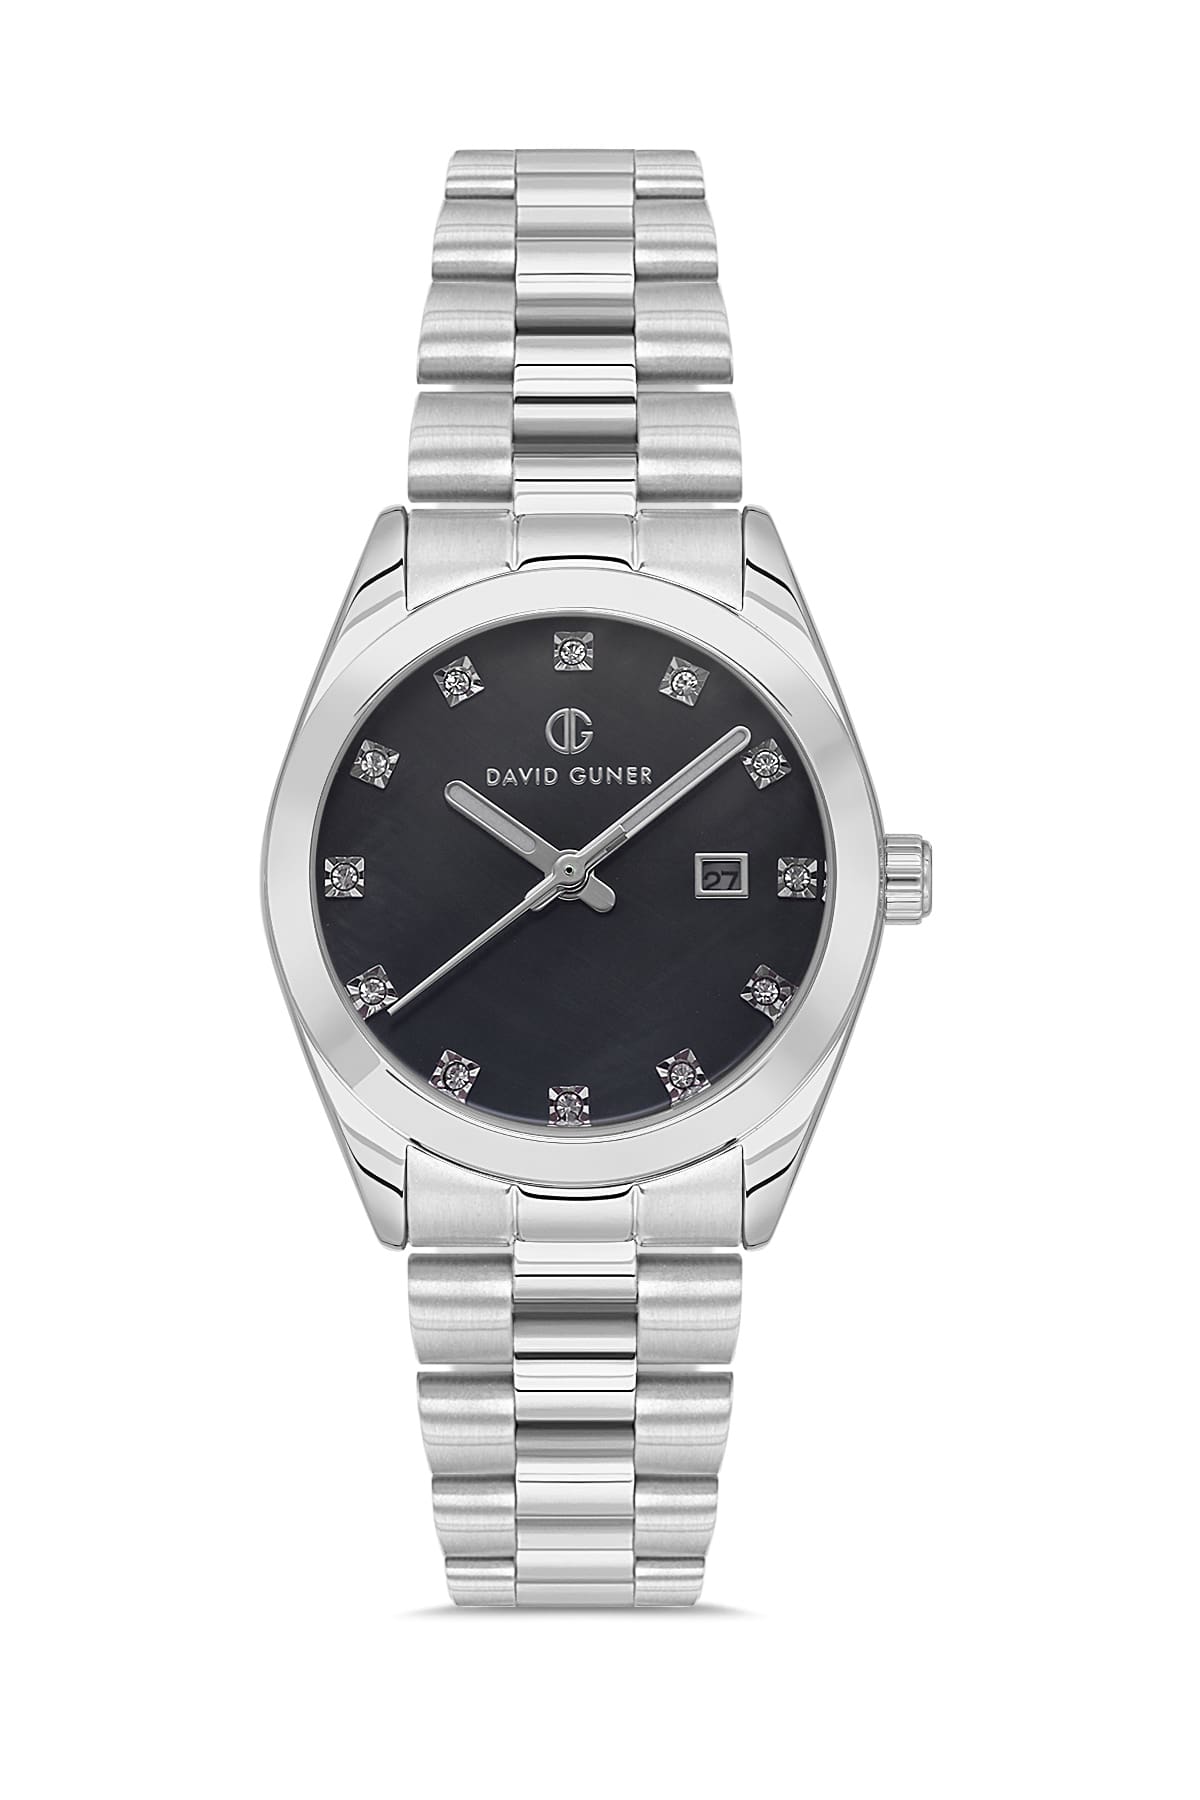 DAVID GUNER Black Dial Silver Plated Women's Wristwatch